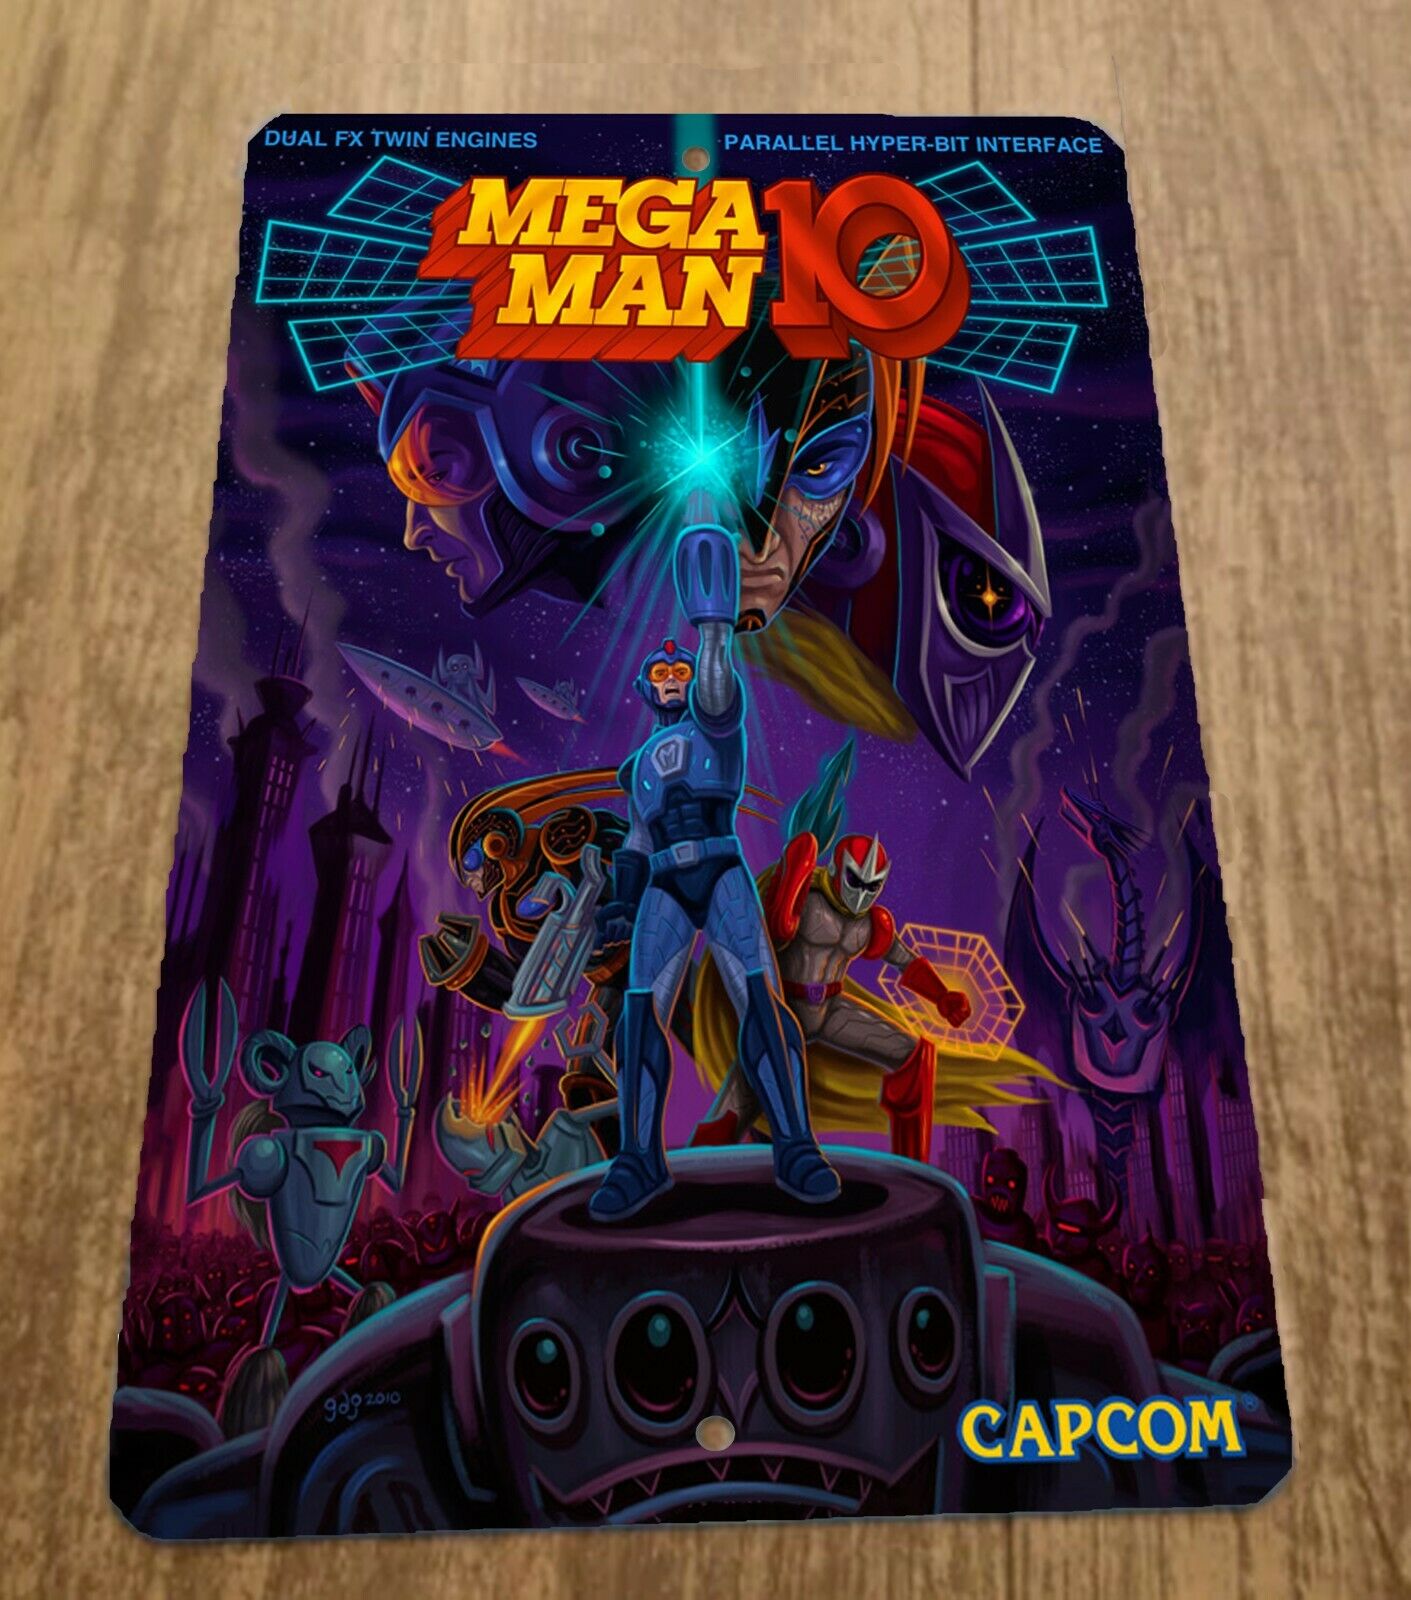 Mega Man 10 Video Game Box Art  8x12 Metal Wall Sign Retro 80s Arcade